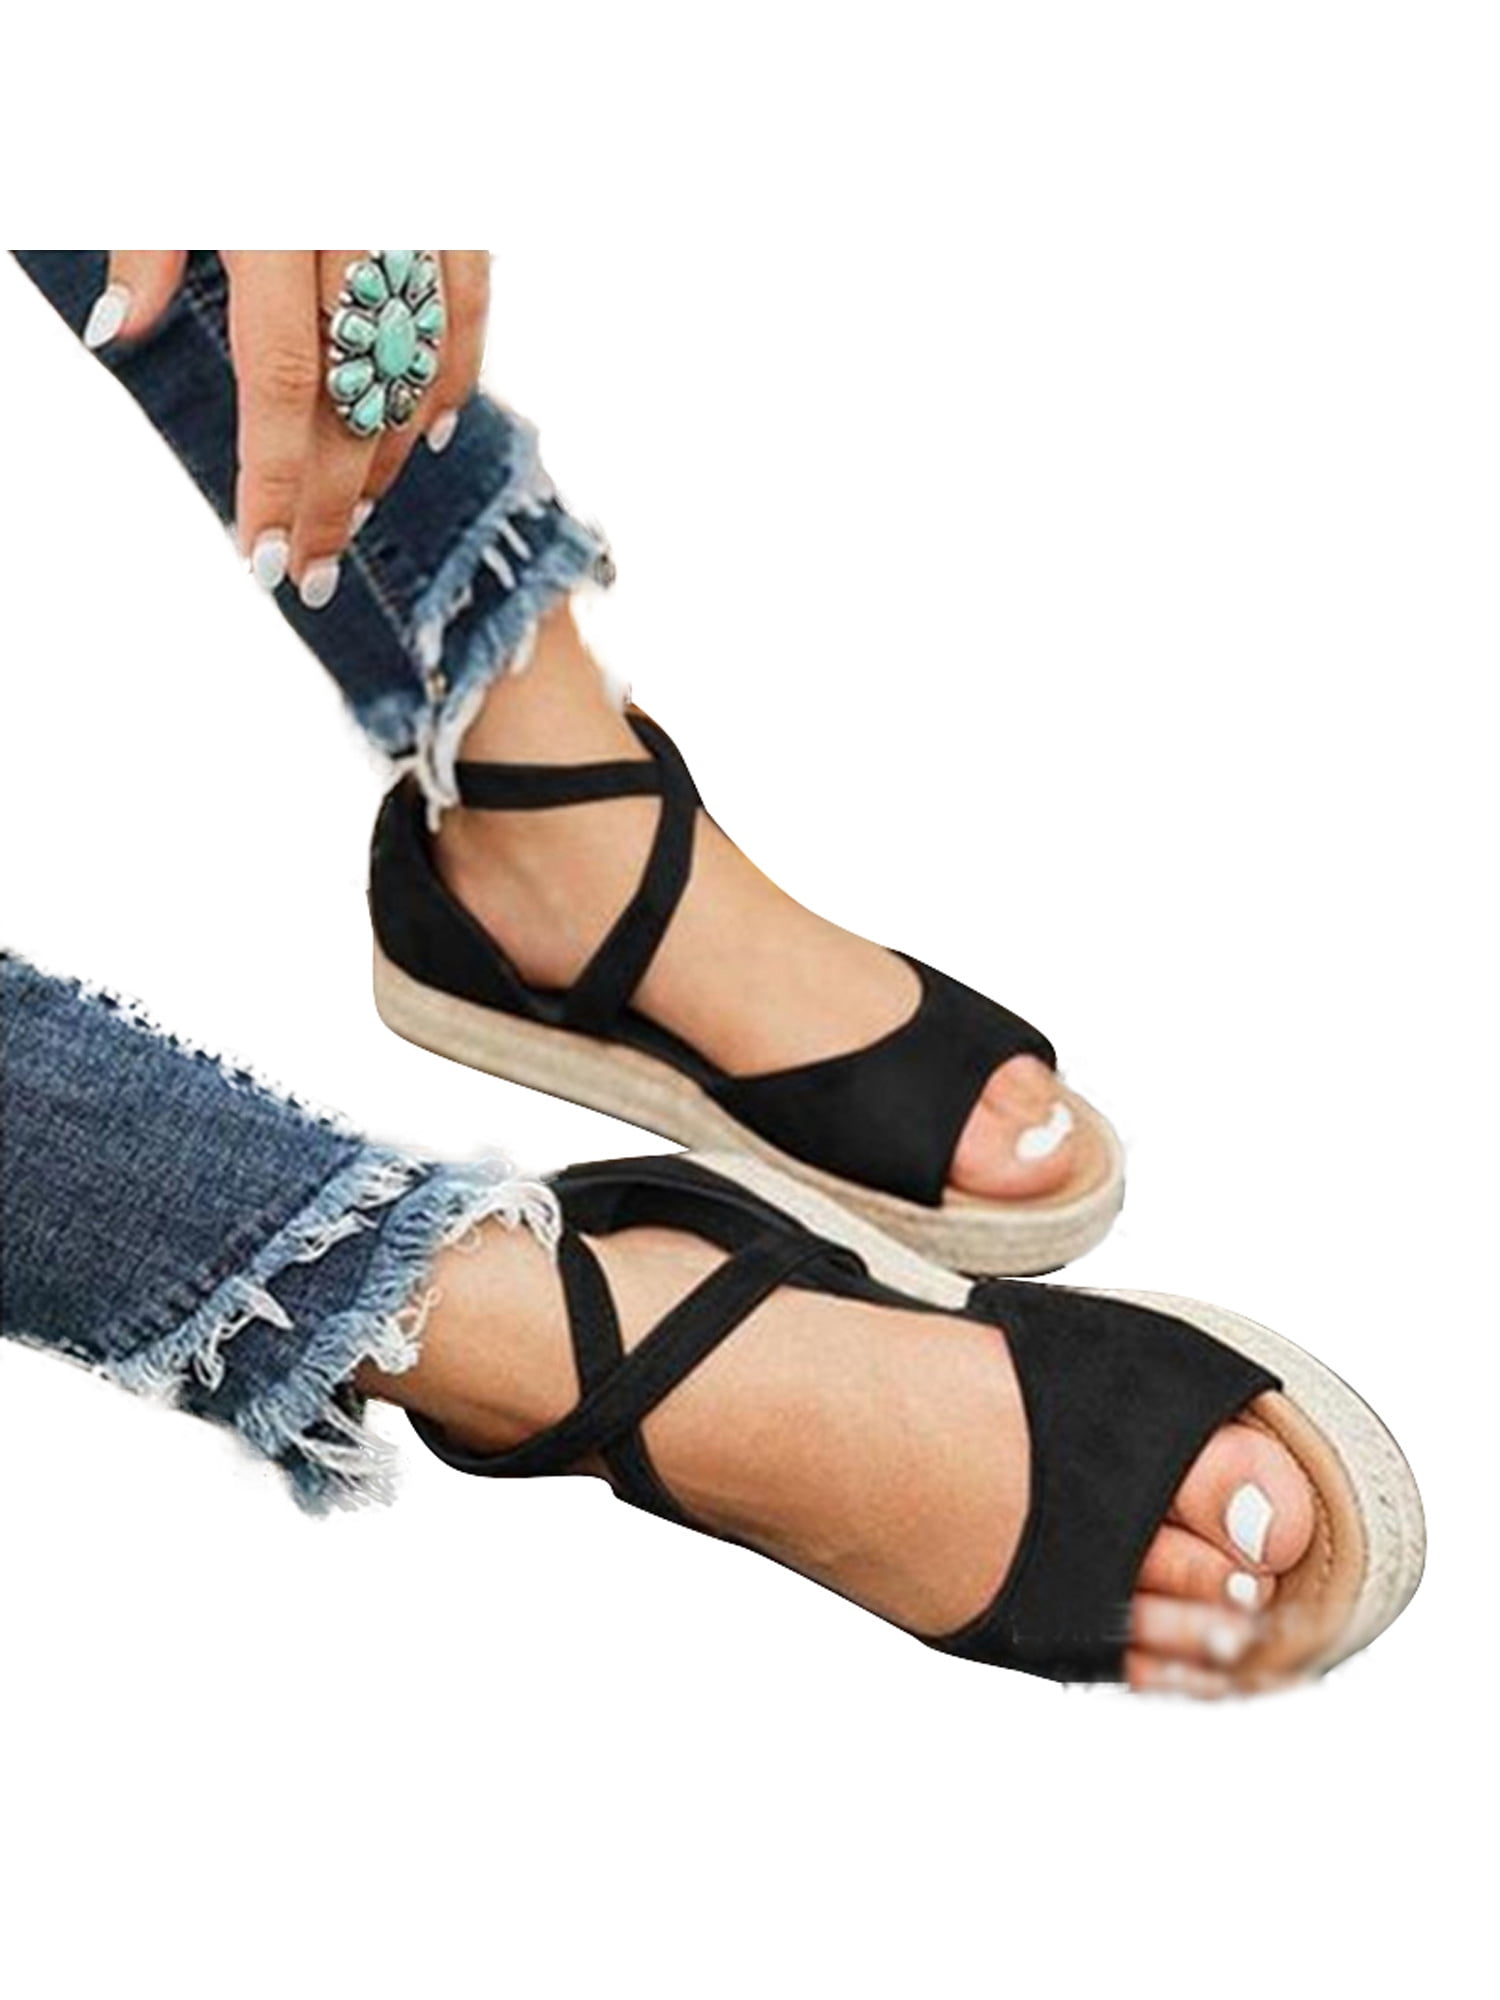 Womens Flat Sandals Ladies Ankle Strap Casual Flatform Summer Pumps Shoes Sizes